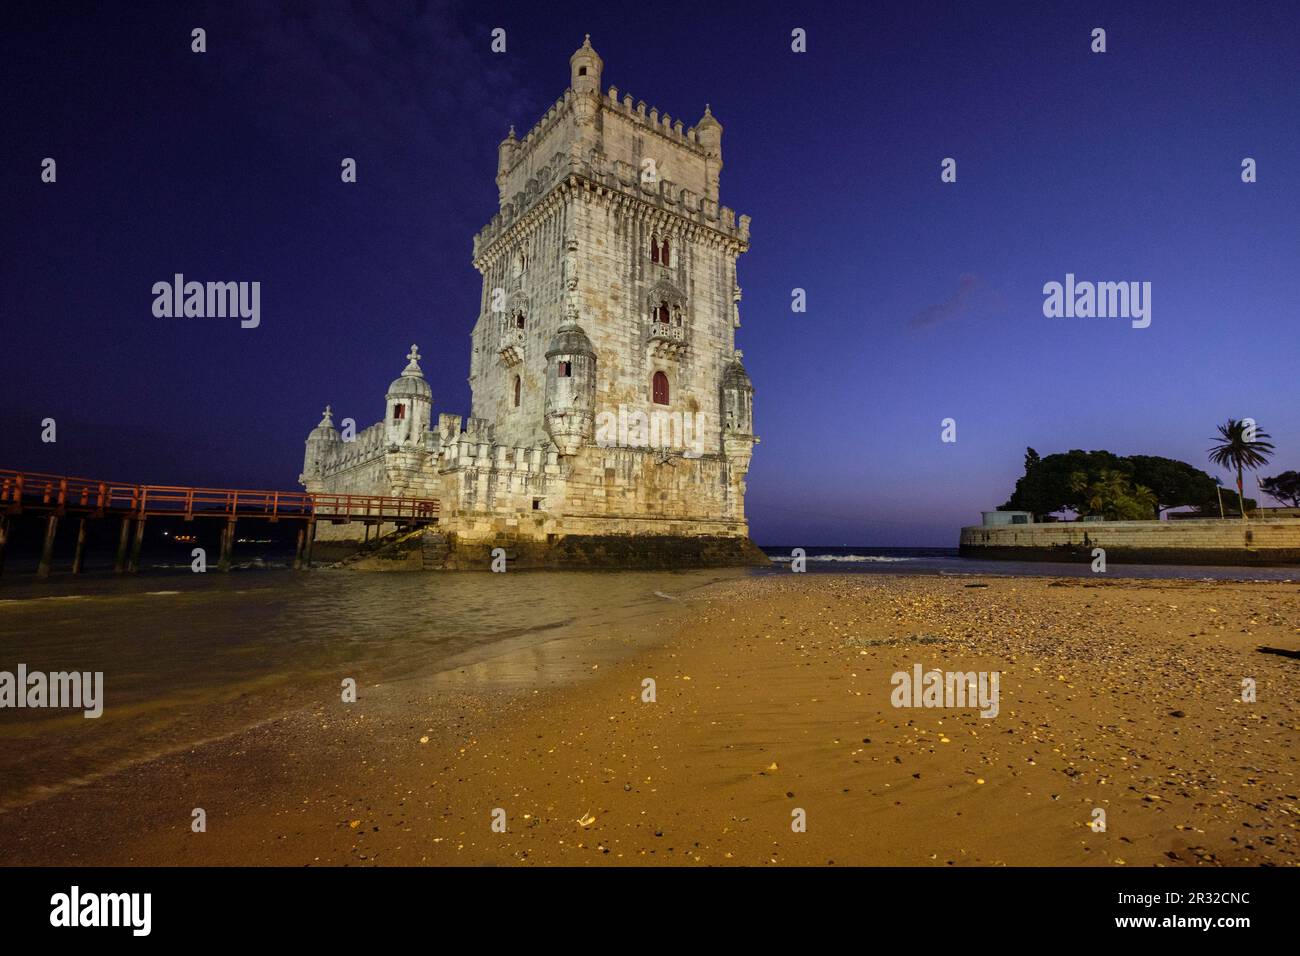 Torre de Belém, arquitectura Manuelina, Lisboa, Portugal. Stockfoto